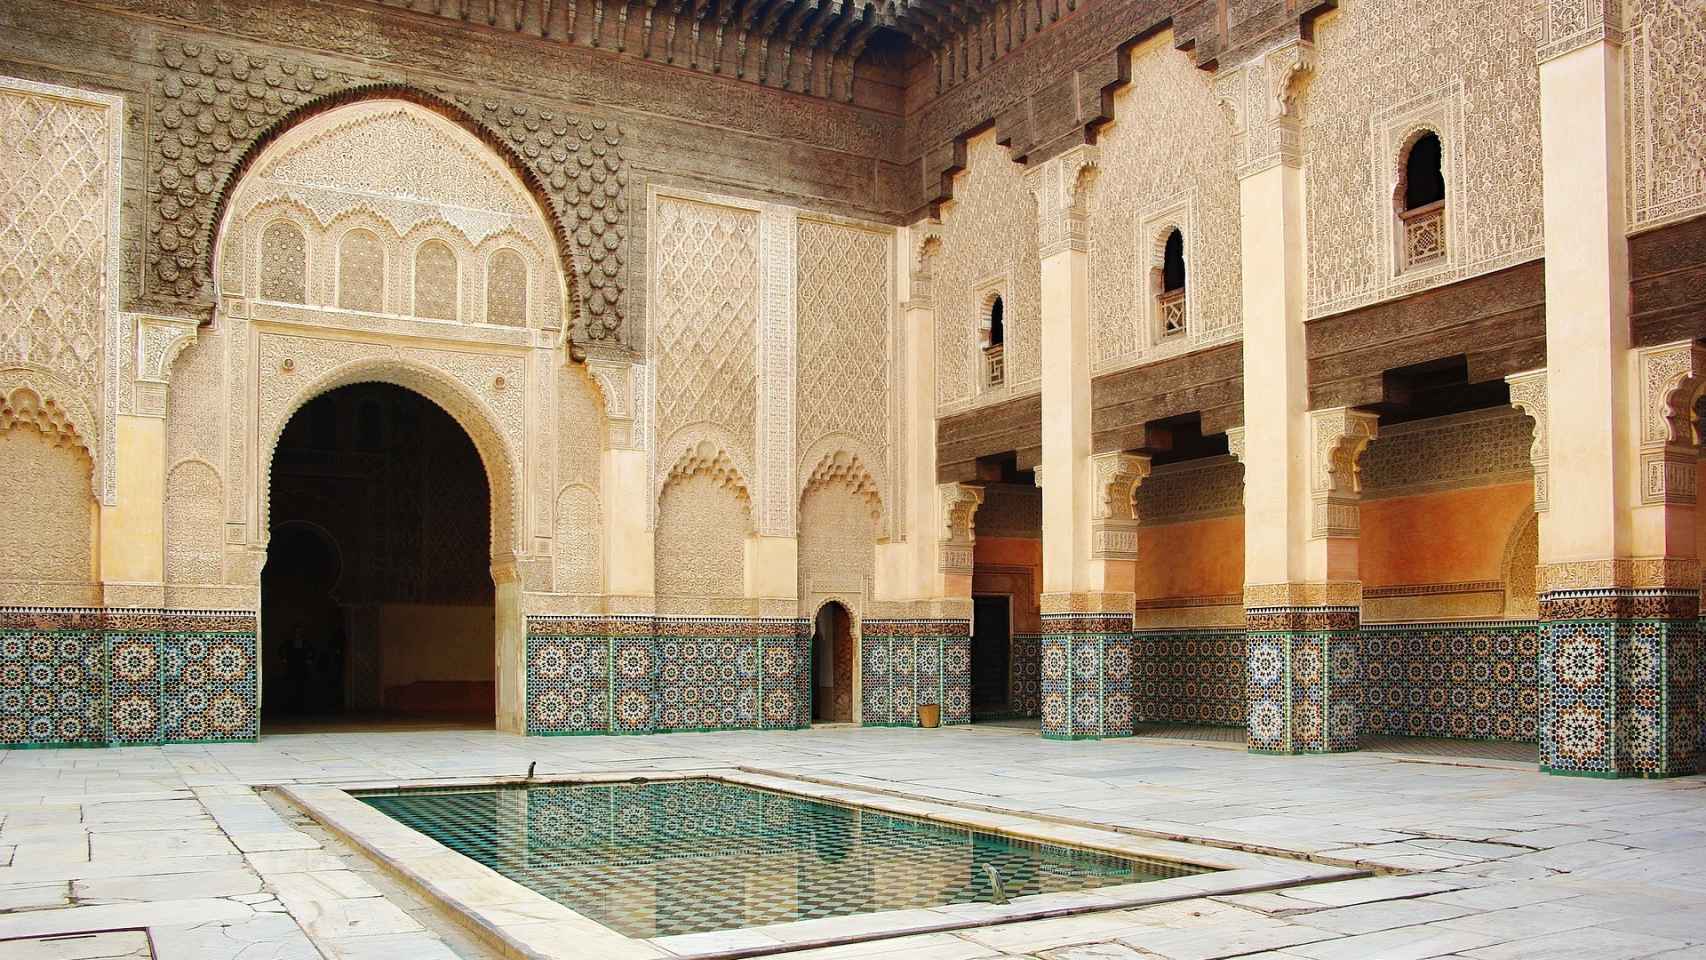 Marruecos.